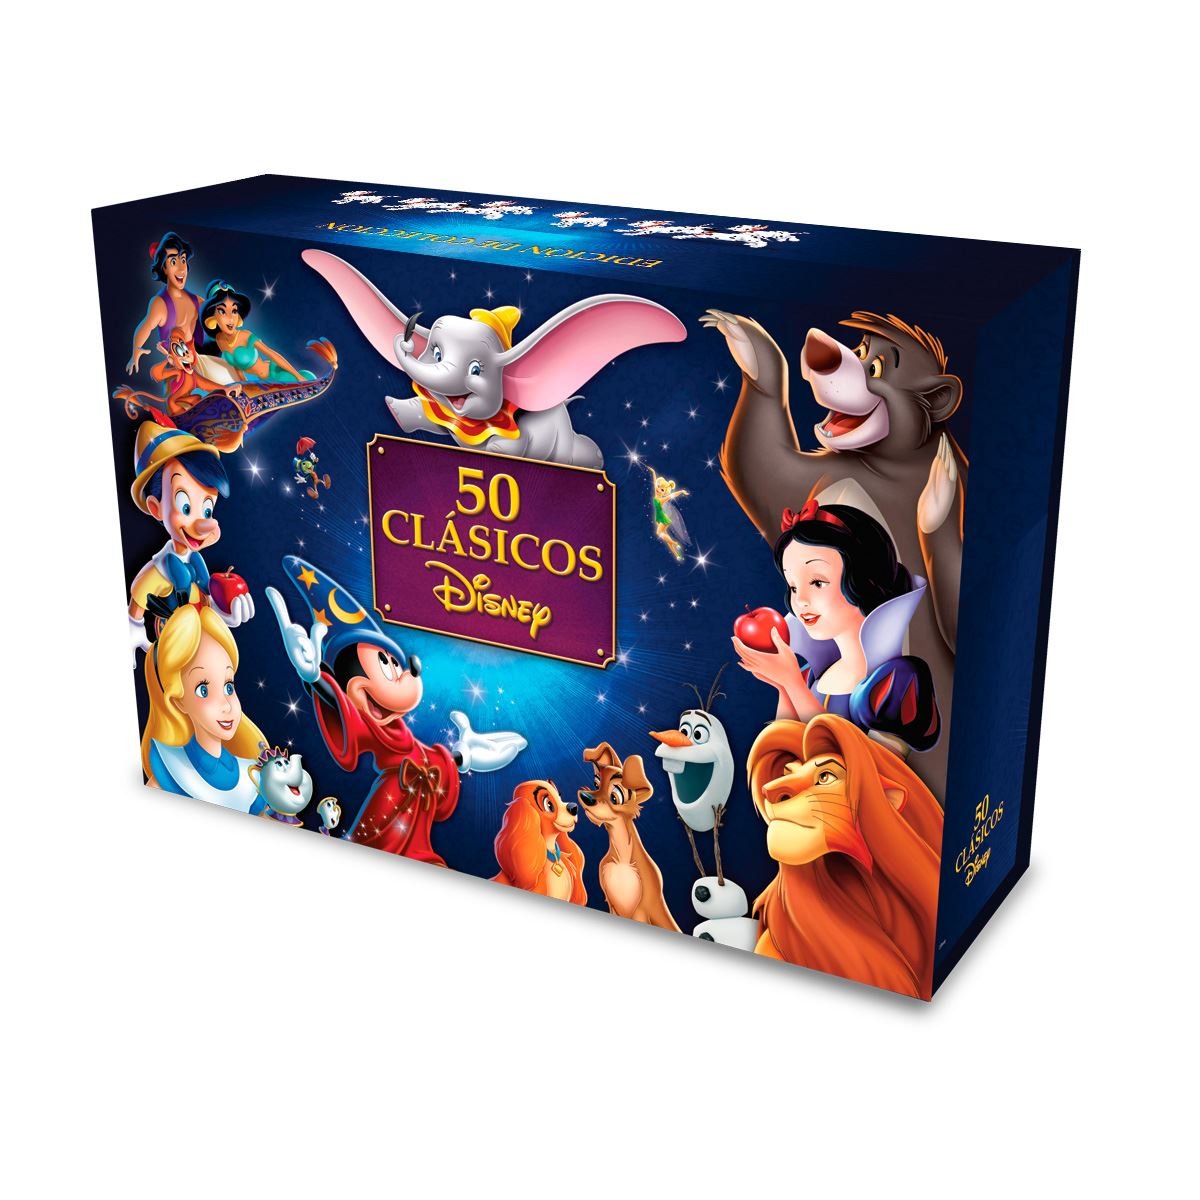 Dvd 50 Clásicos de Disney Paquete de Colección